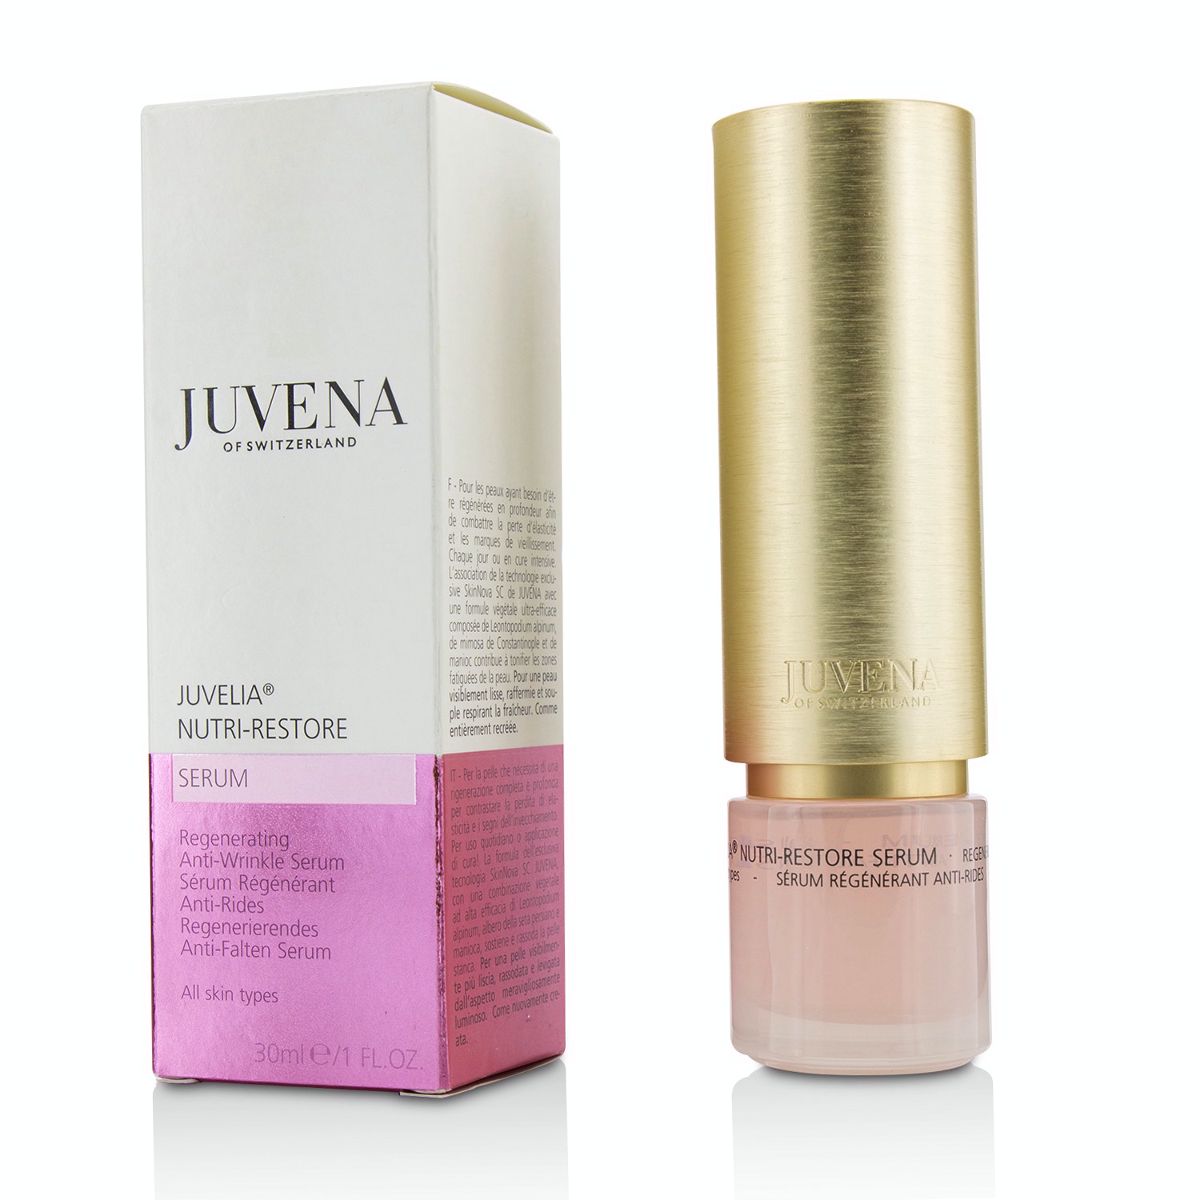 Juvelia Nutri-Restore Regenerating Anti-Wrinkle Serum - All Skin Types Juvena Image